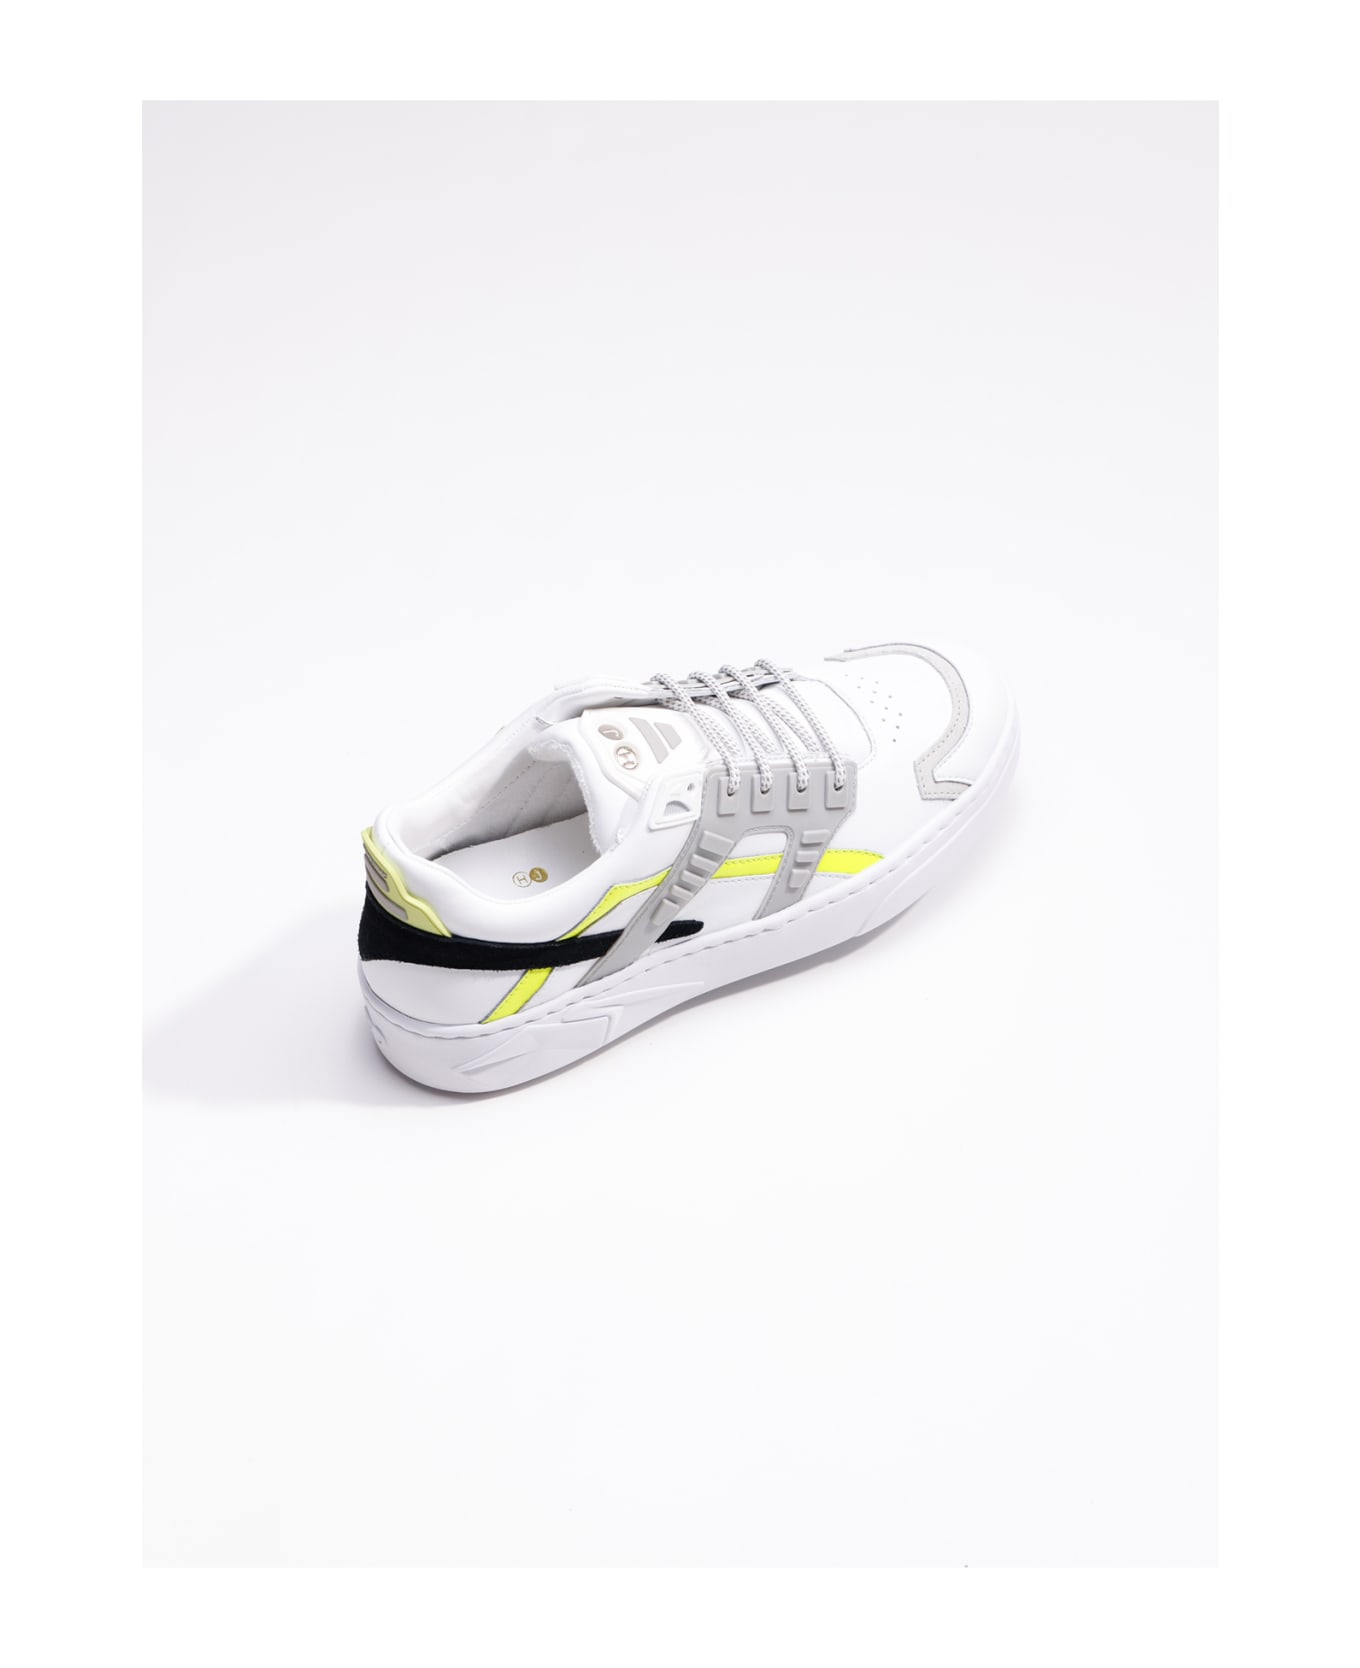 Hide&Jack Low Top Sneaker - Mini Silverstone Yellow White スニーカー